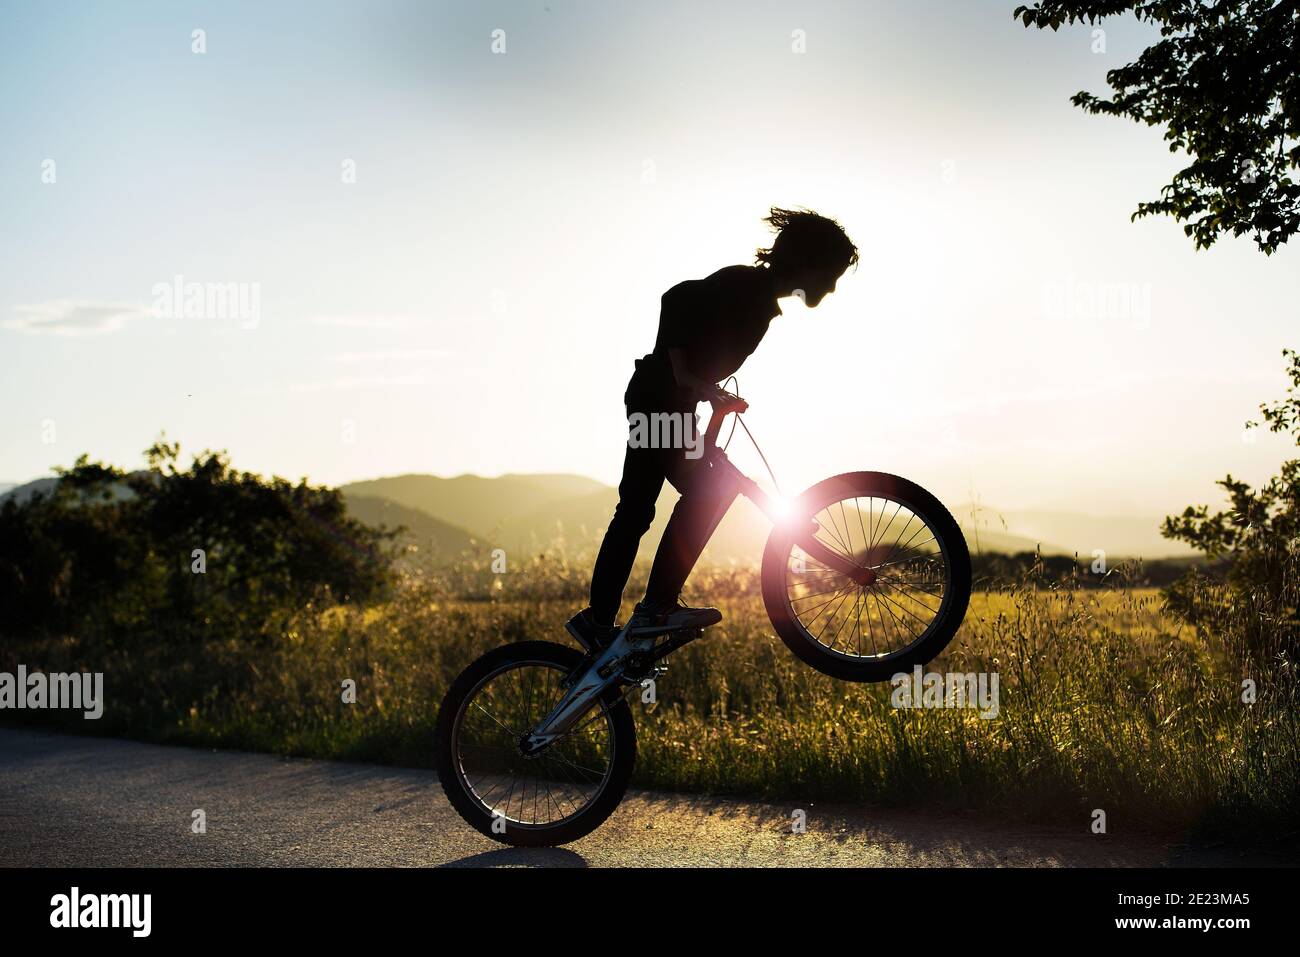 persona saltando con la bicicleta delante del sol Stock Photo